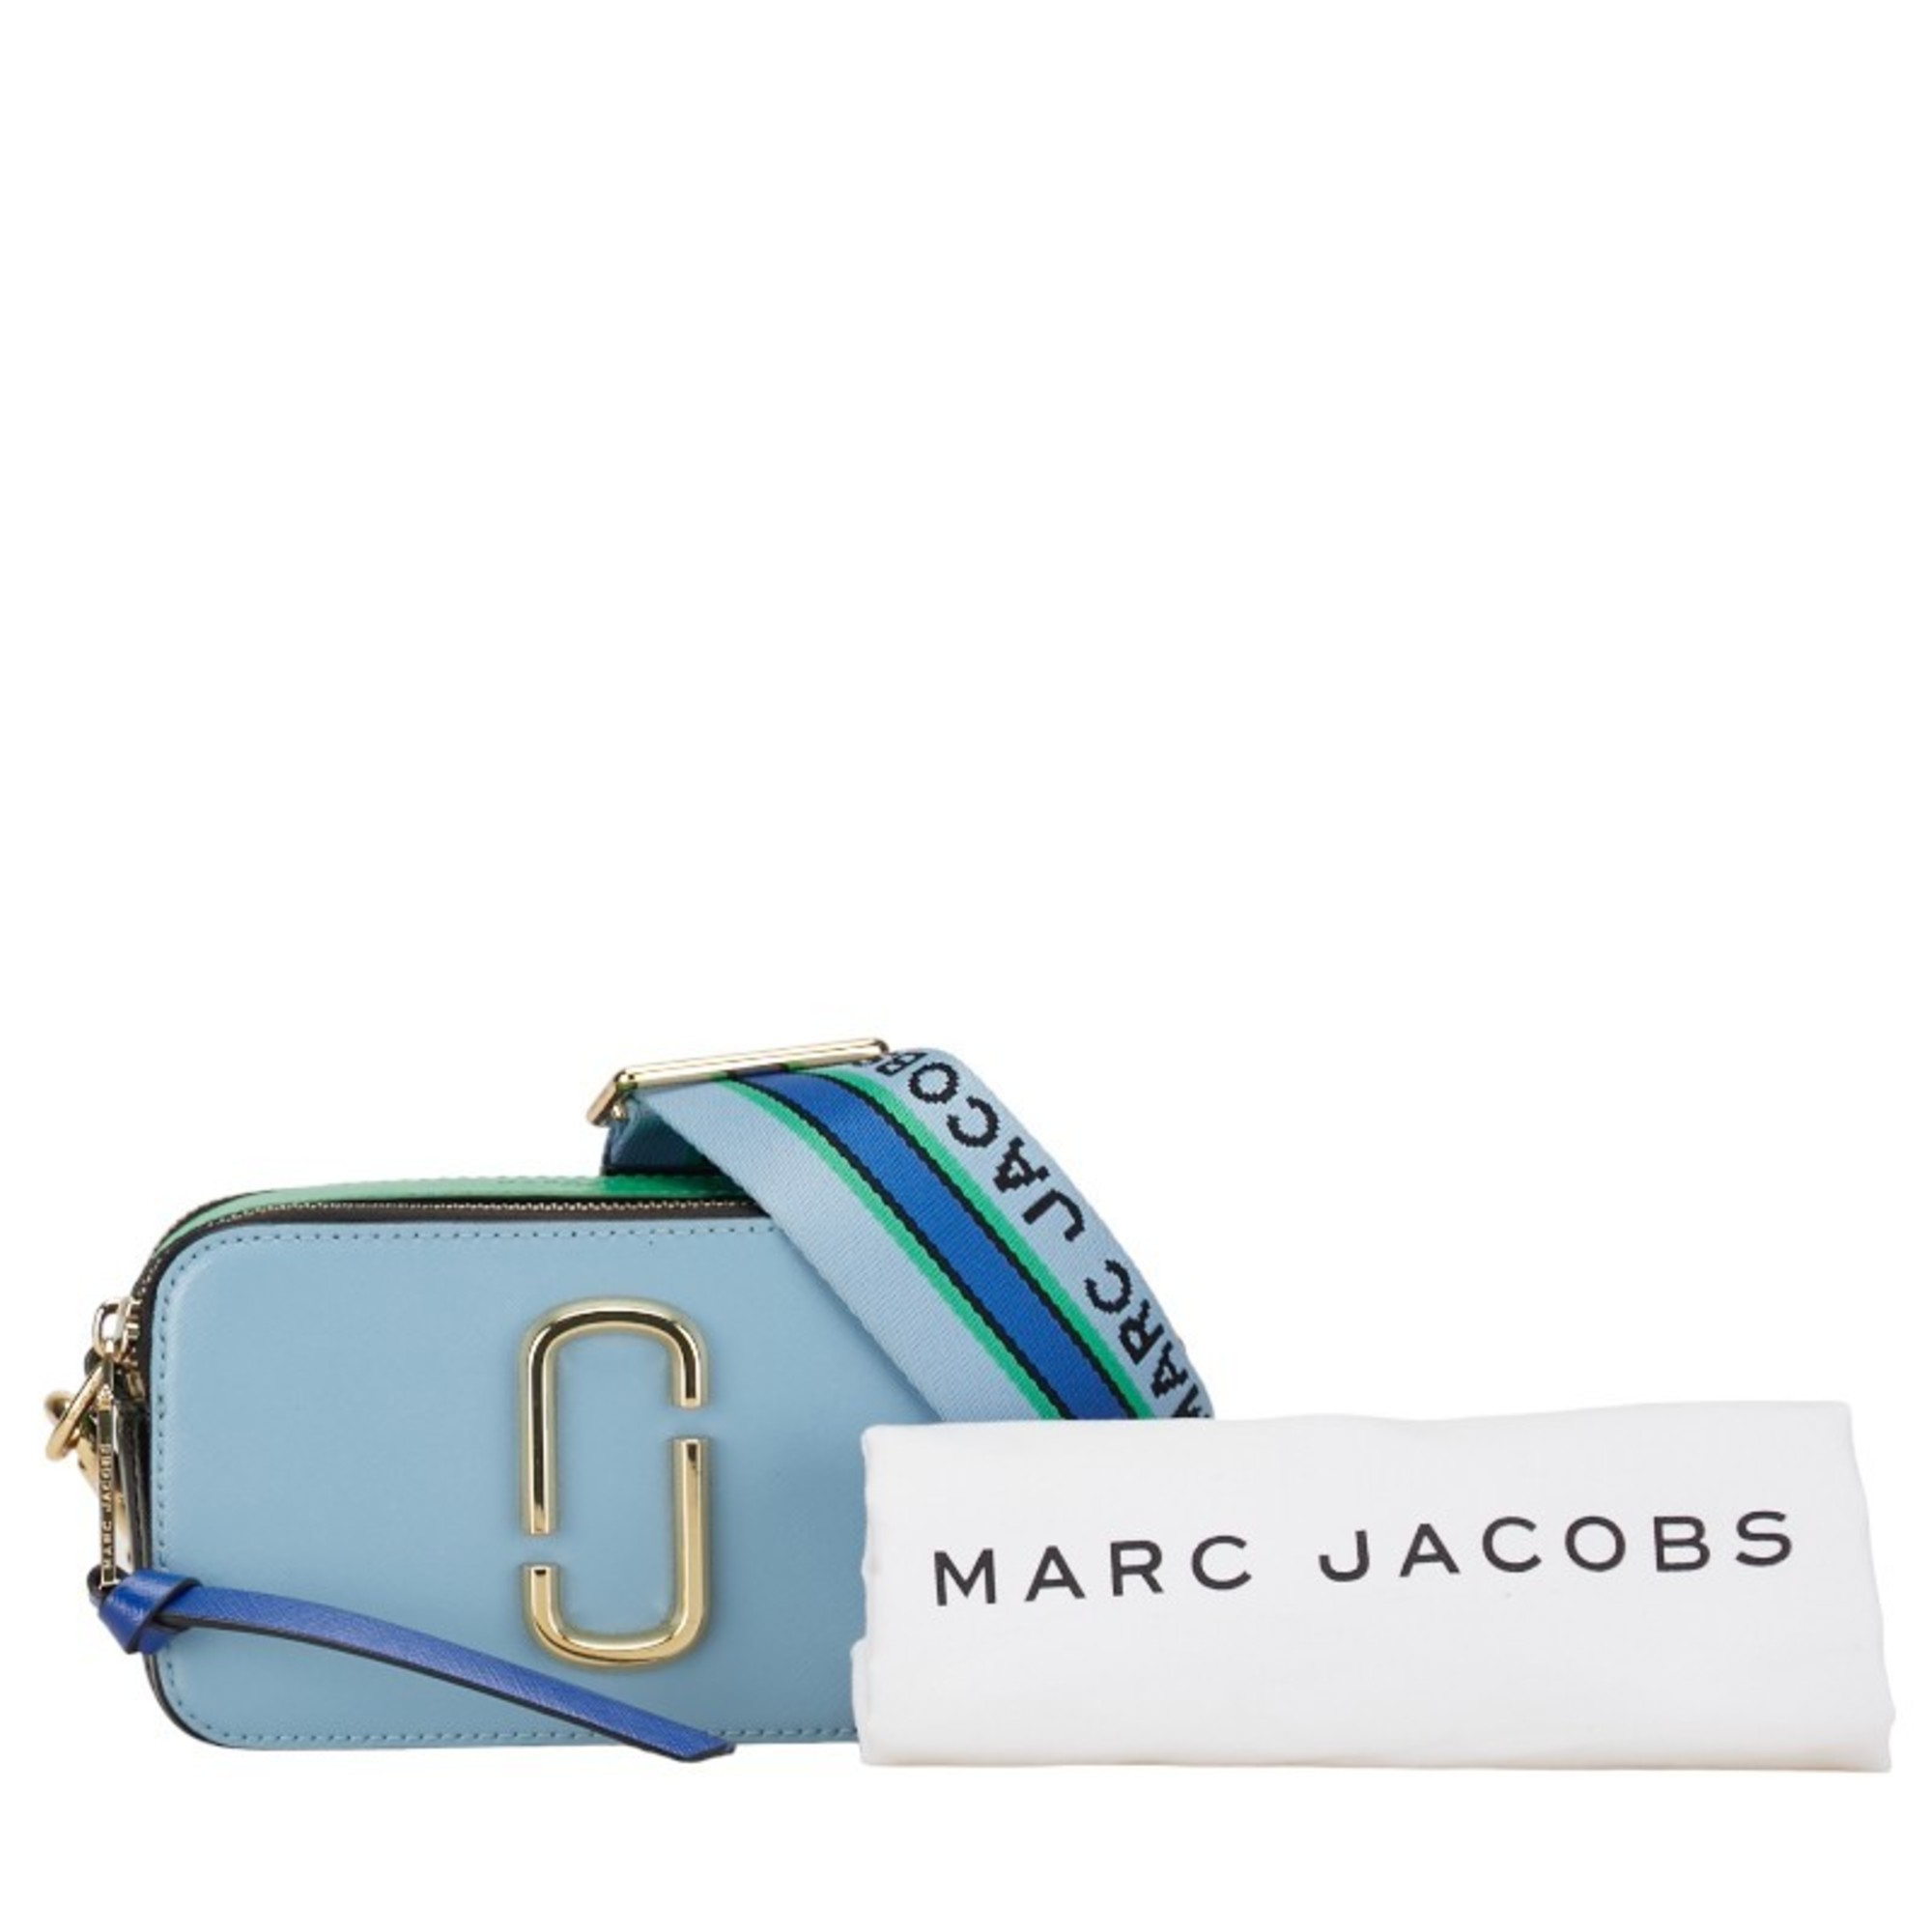 Marc Jacobs Shoulder Bag Blue Green Leather Women's MARC JACOBS